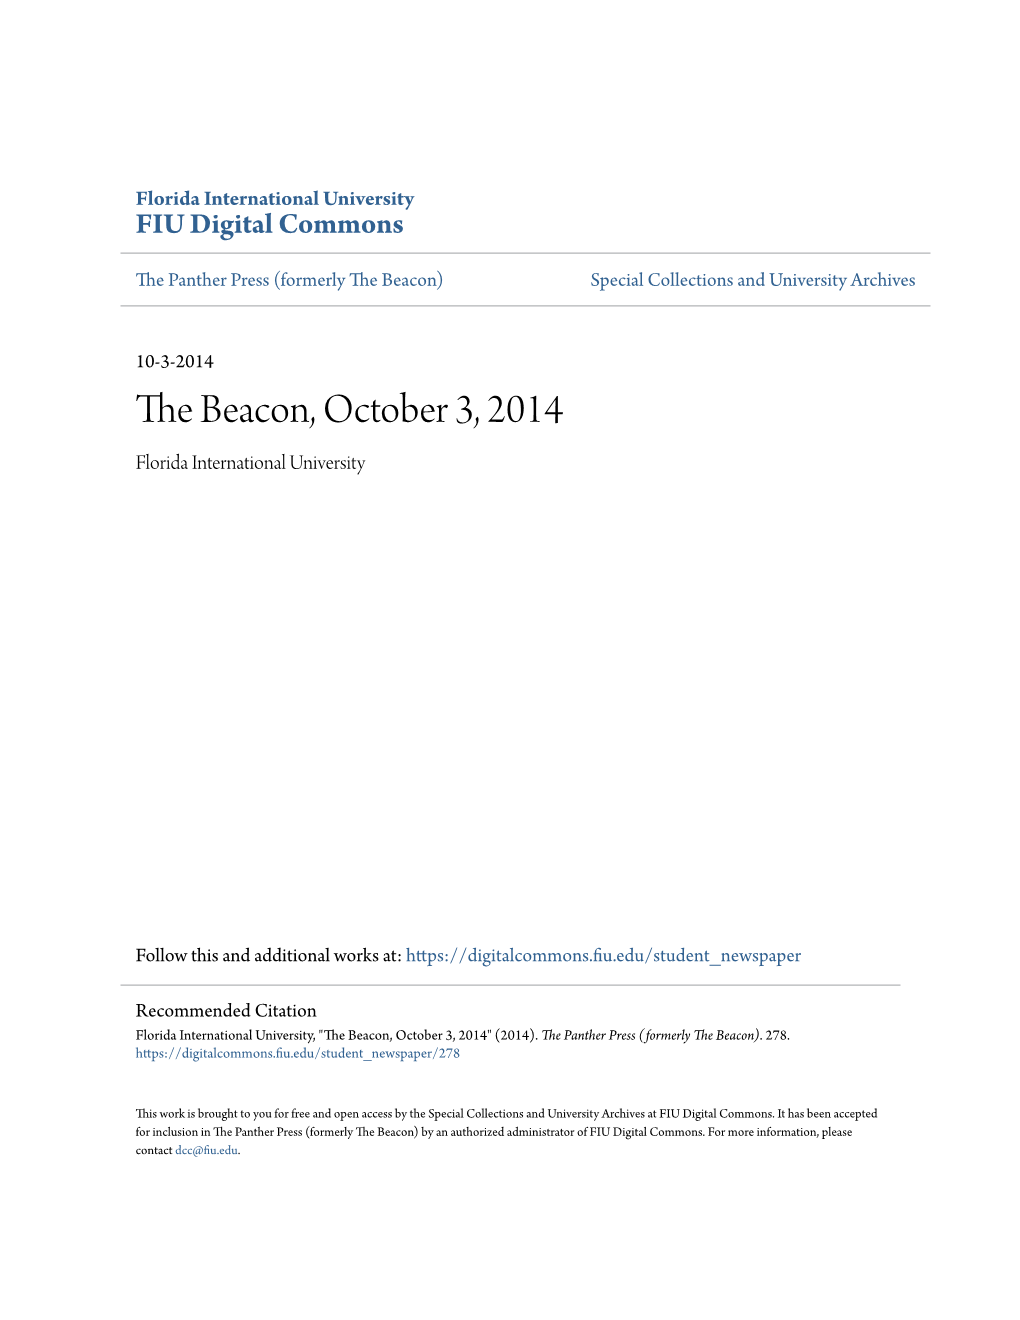 The Beacon, October 3, 2014 Florida International University